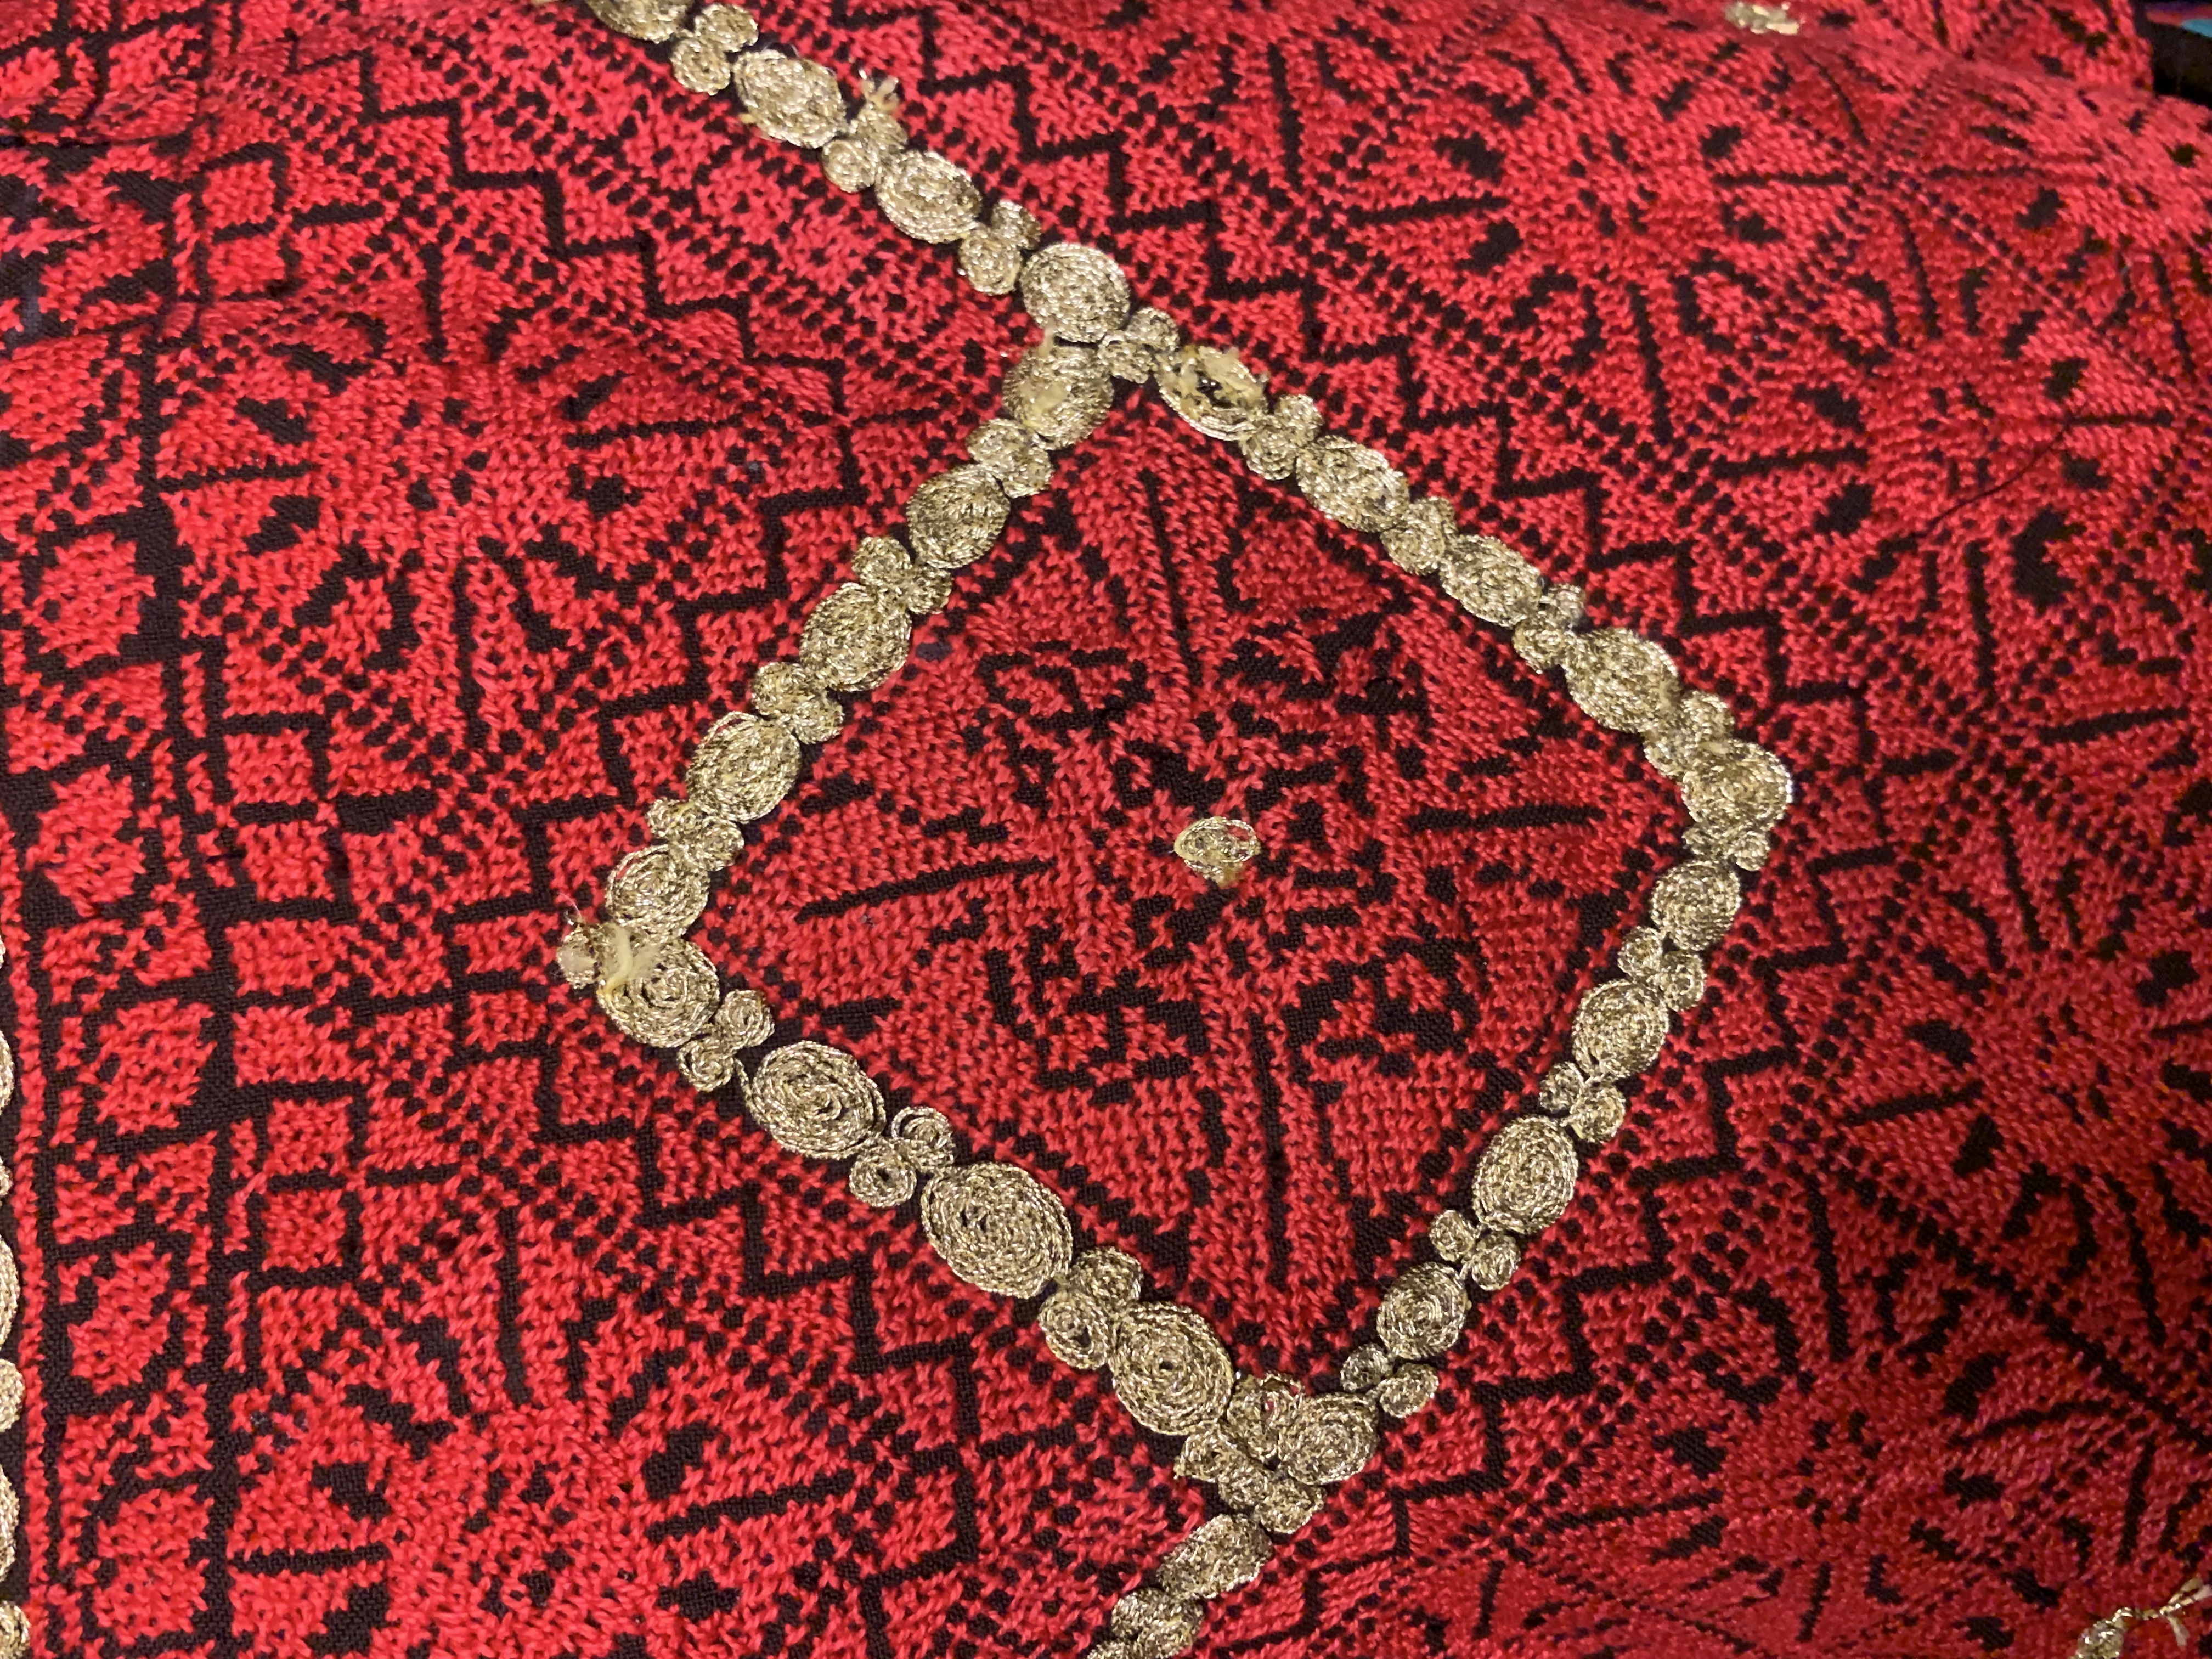 Vantage Palestinian embroidery on a velvet long jacket